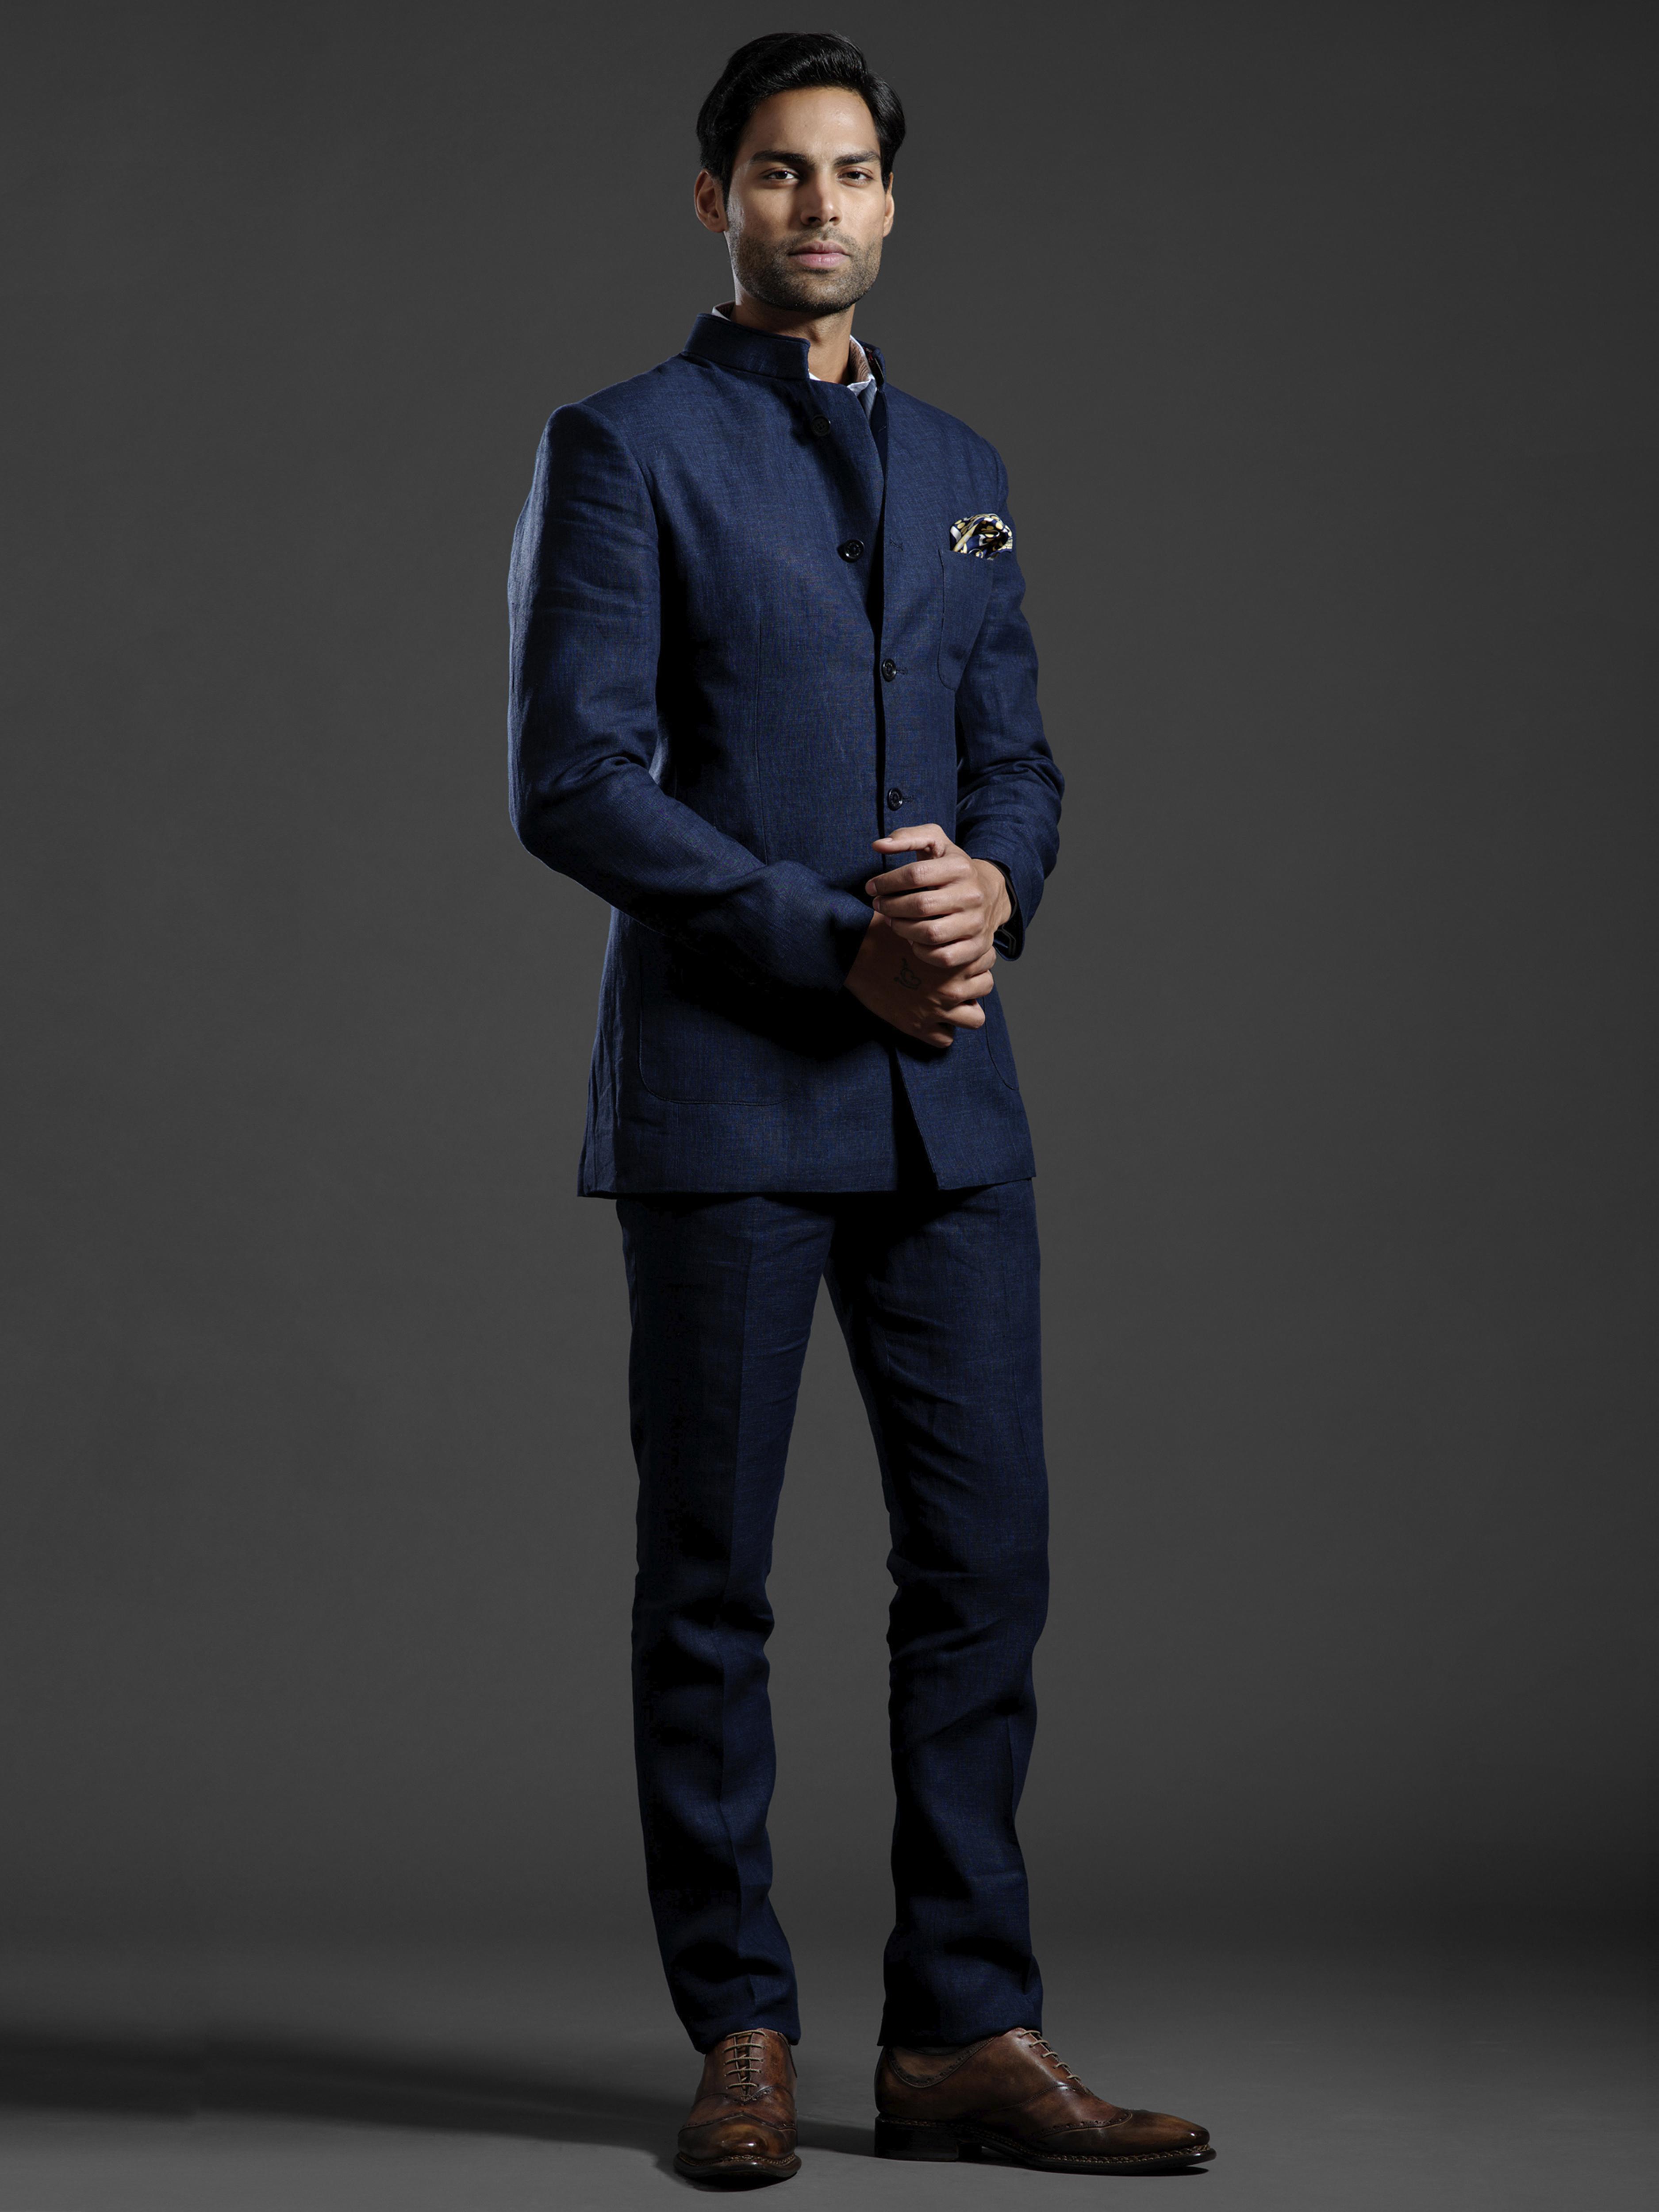 Hazelnut Plain-Solid Premium Cotton Bandhgala/Jodhpuri Suits for Men.